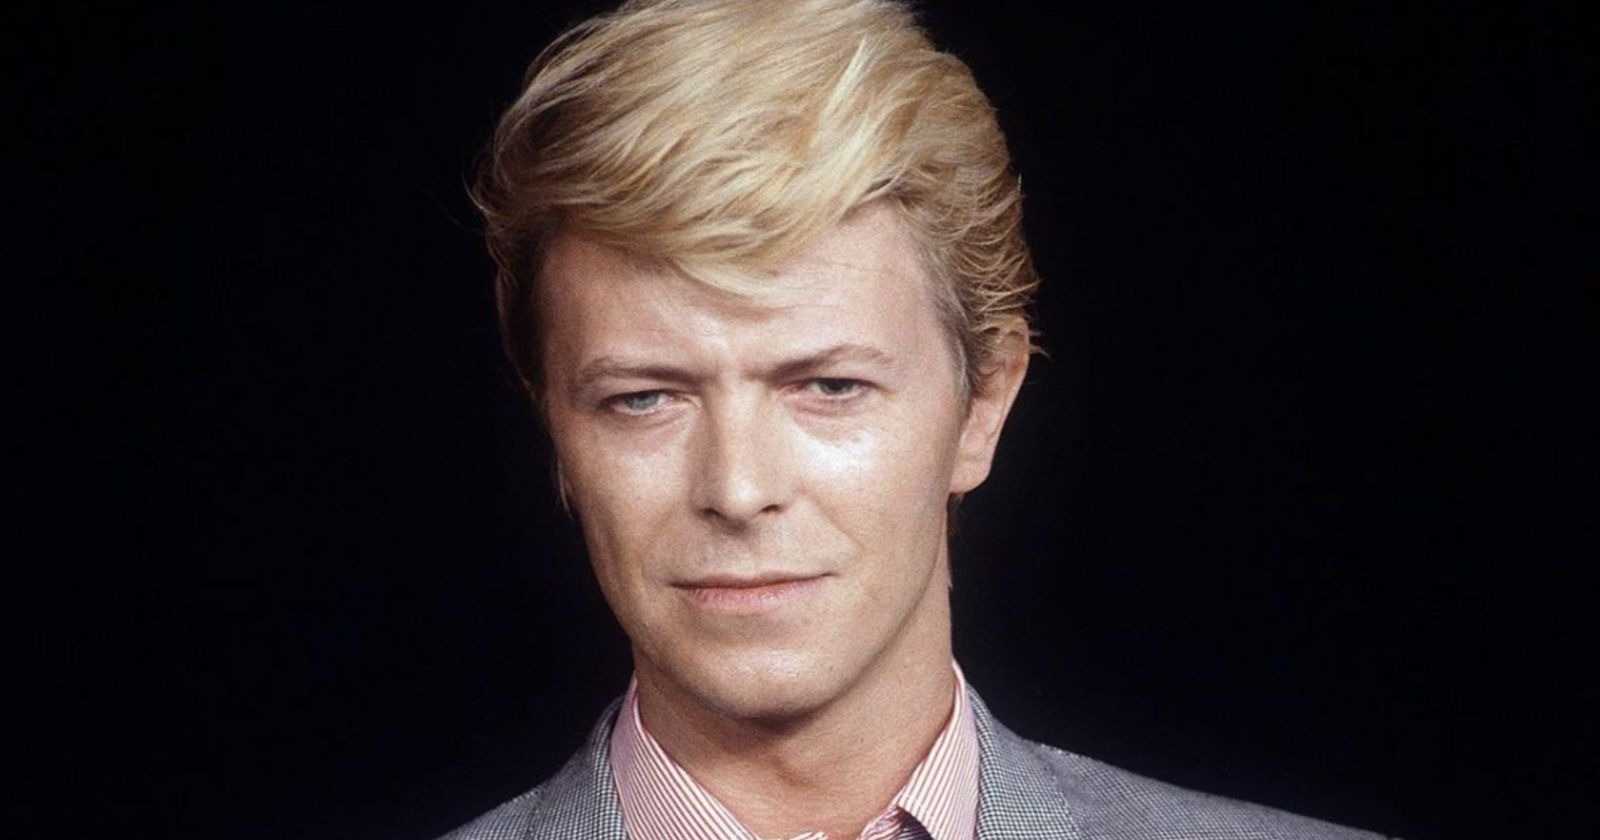 David Bowie 2020